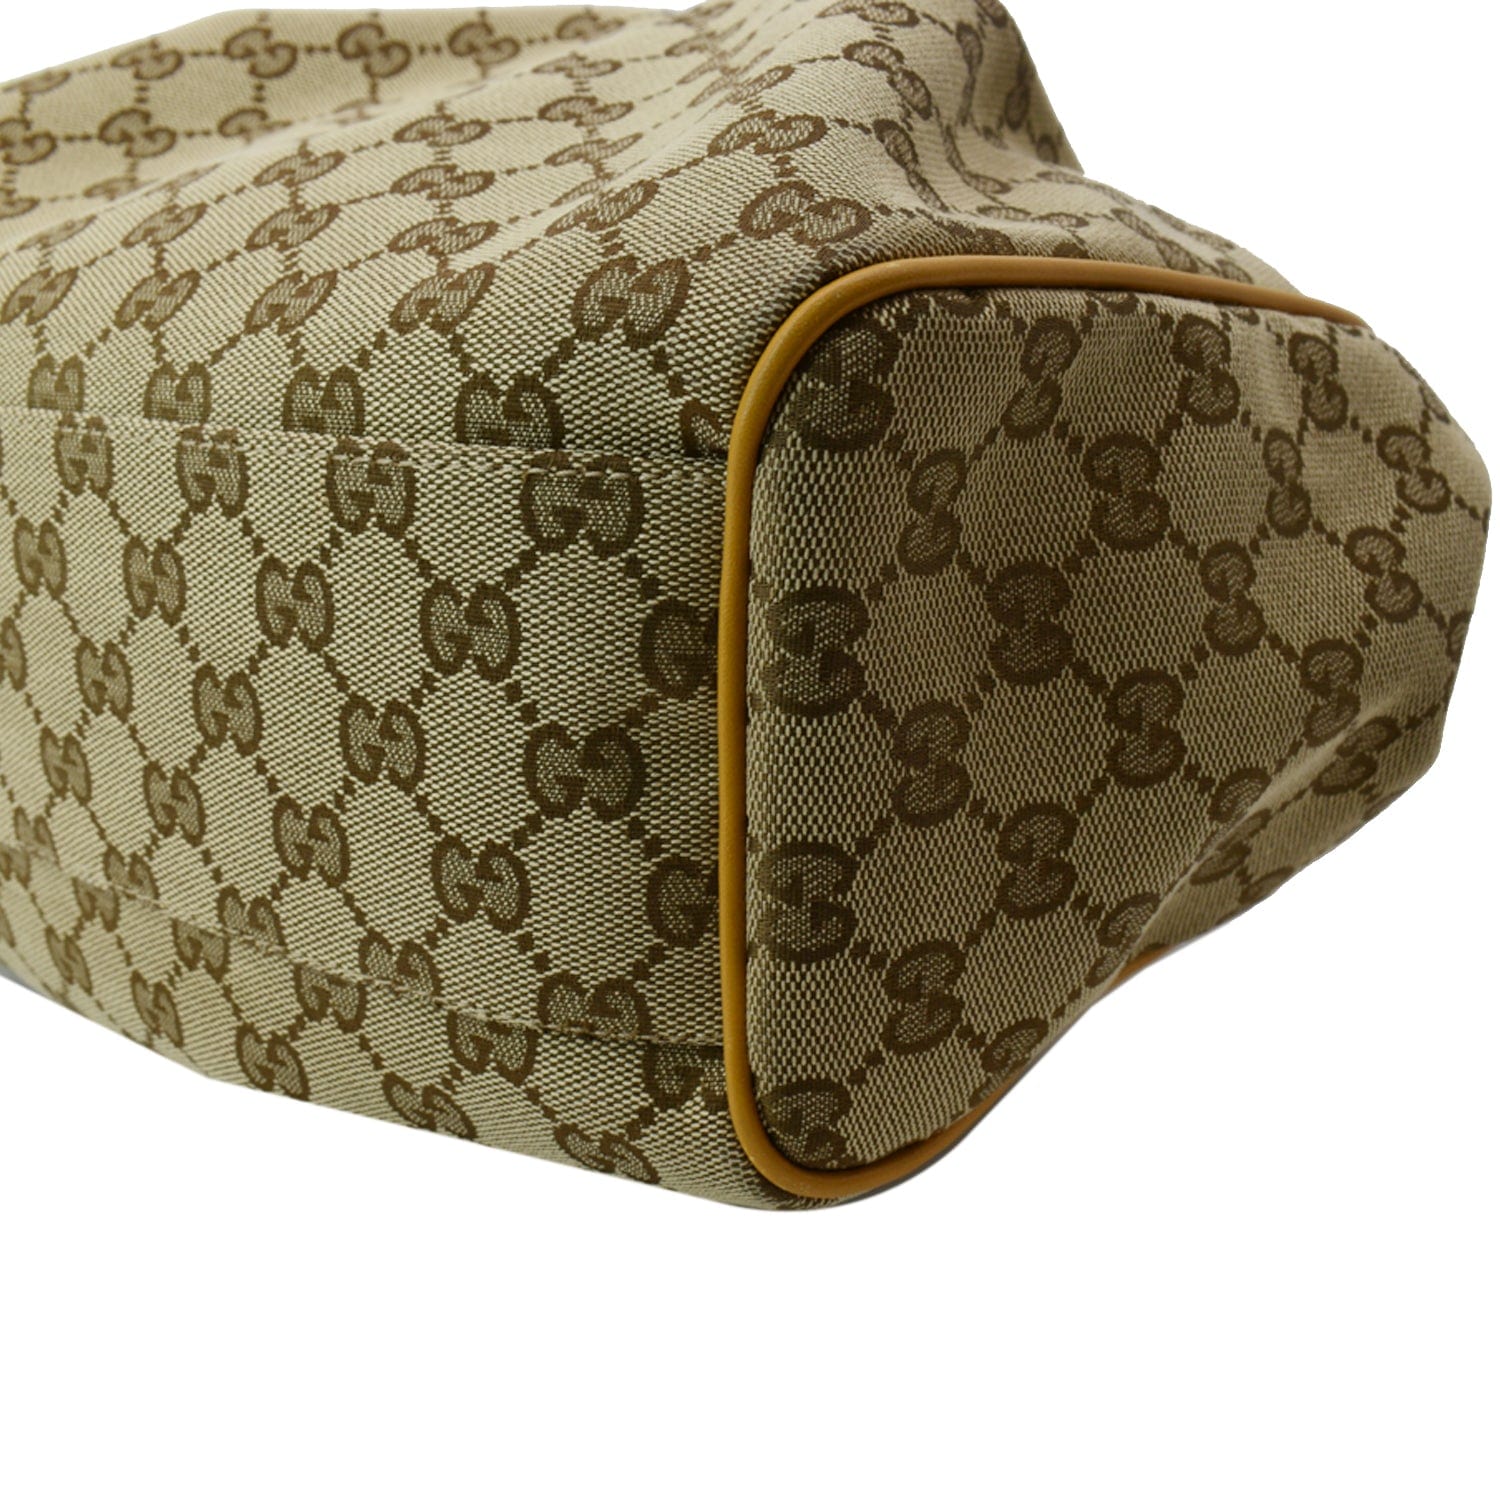 Gucci GG Canvas Medium Sukey Tote - Brown Totes, Handbags